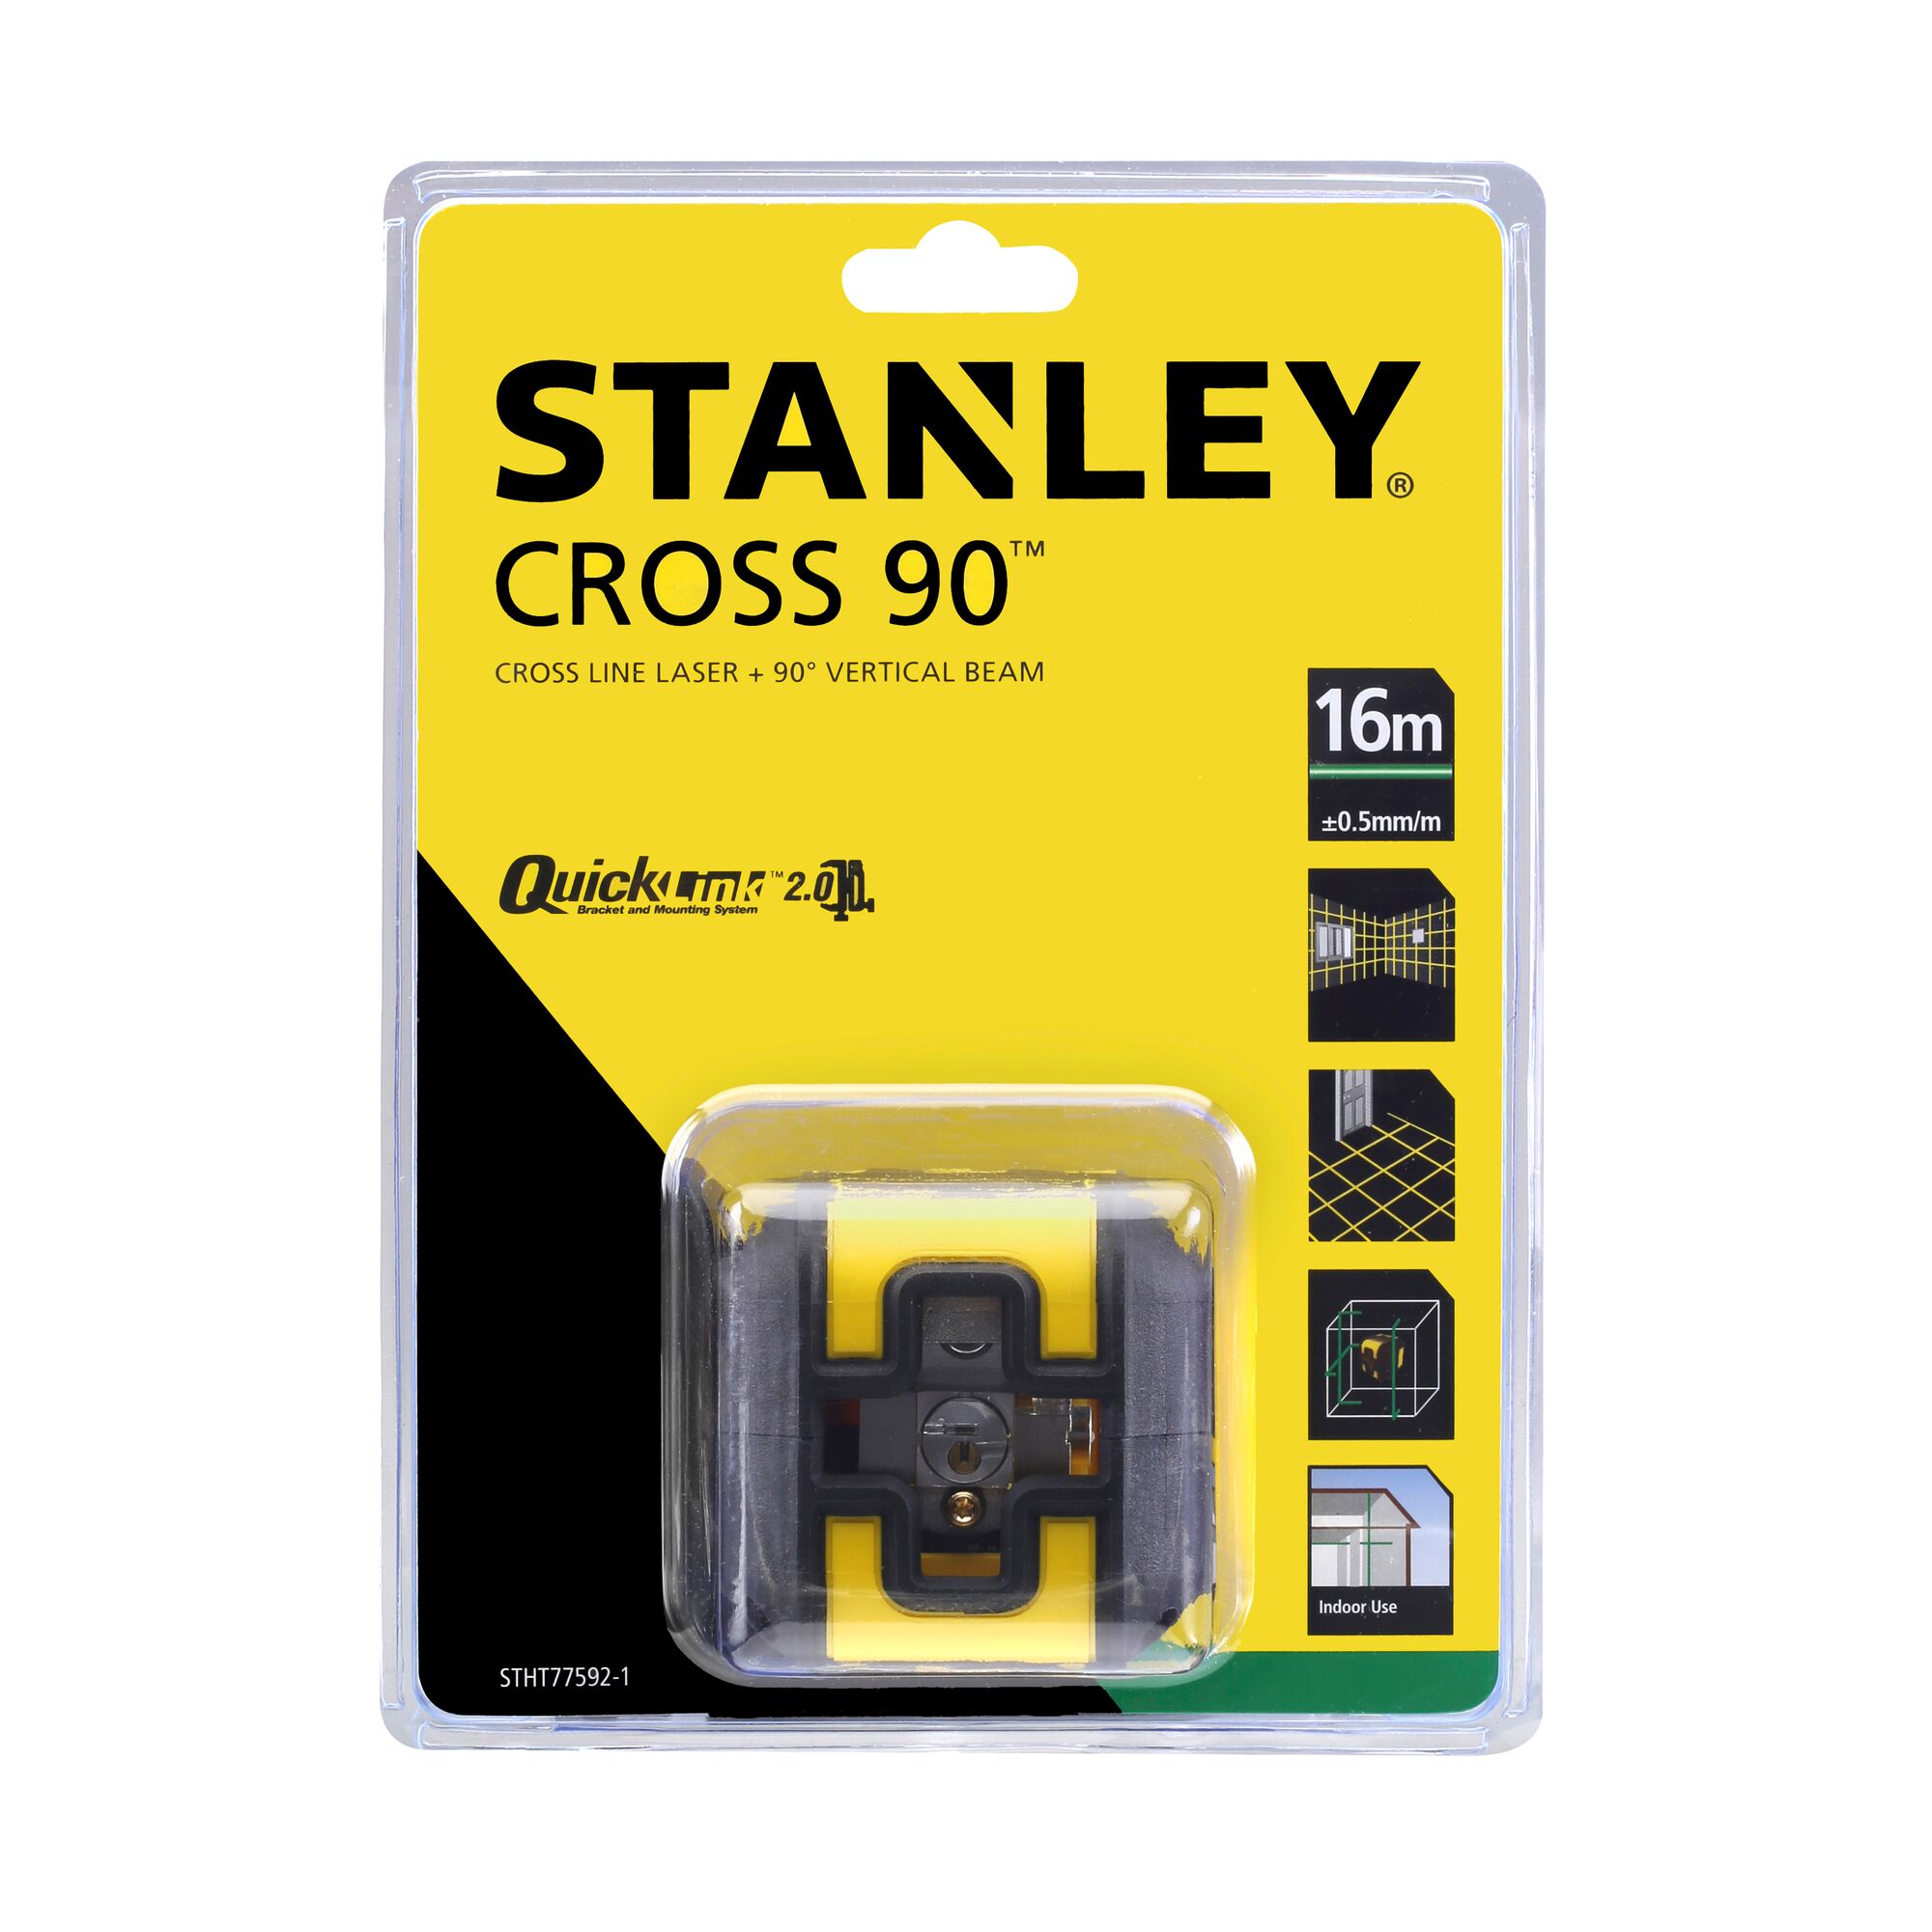 Image of Stanley Cross 90 at Stanley Direct website